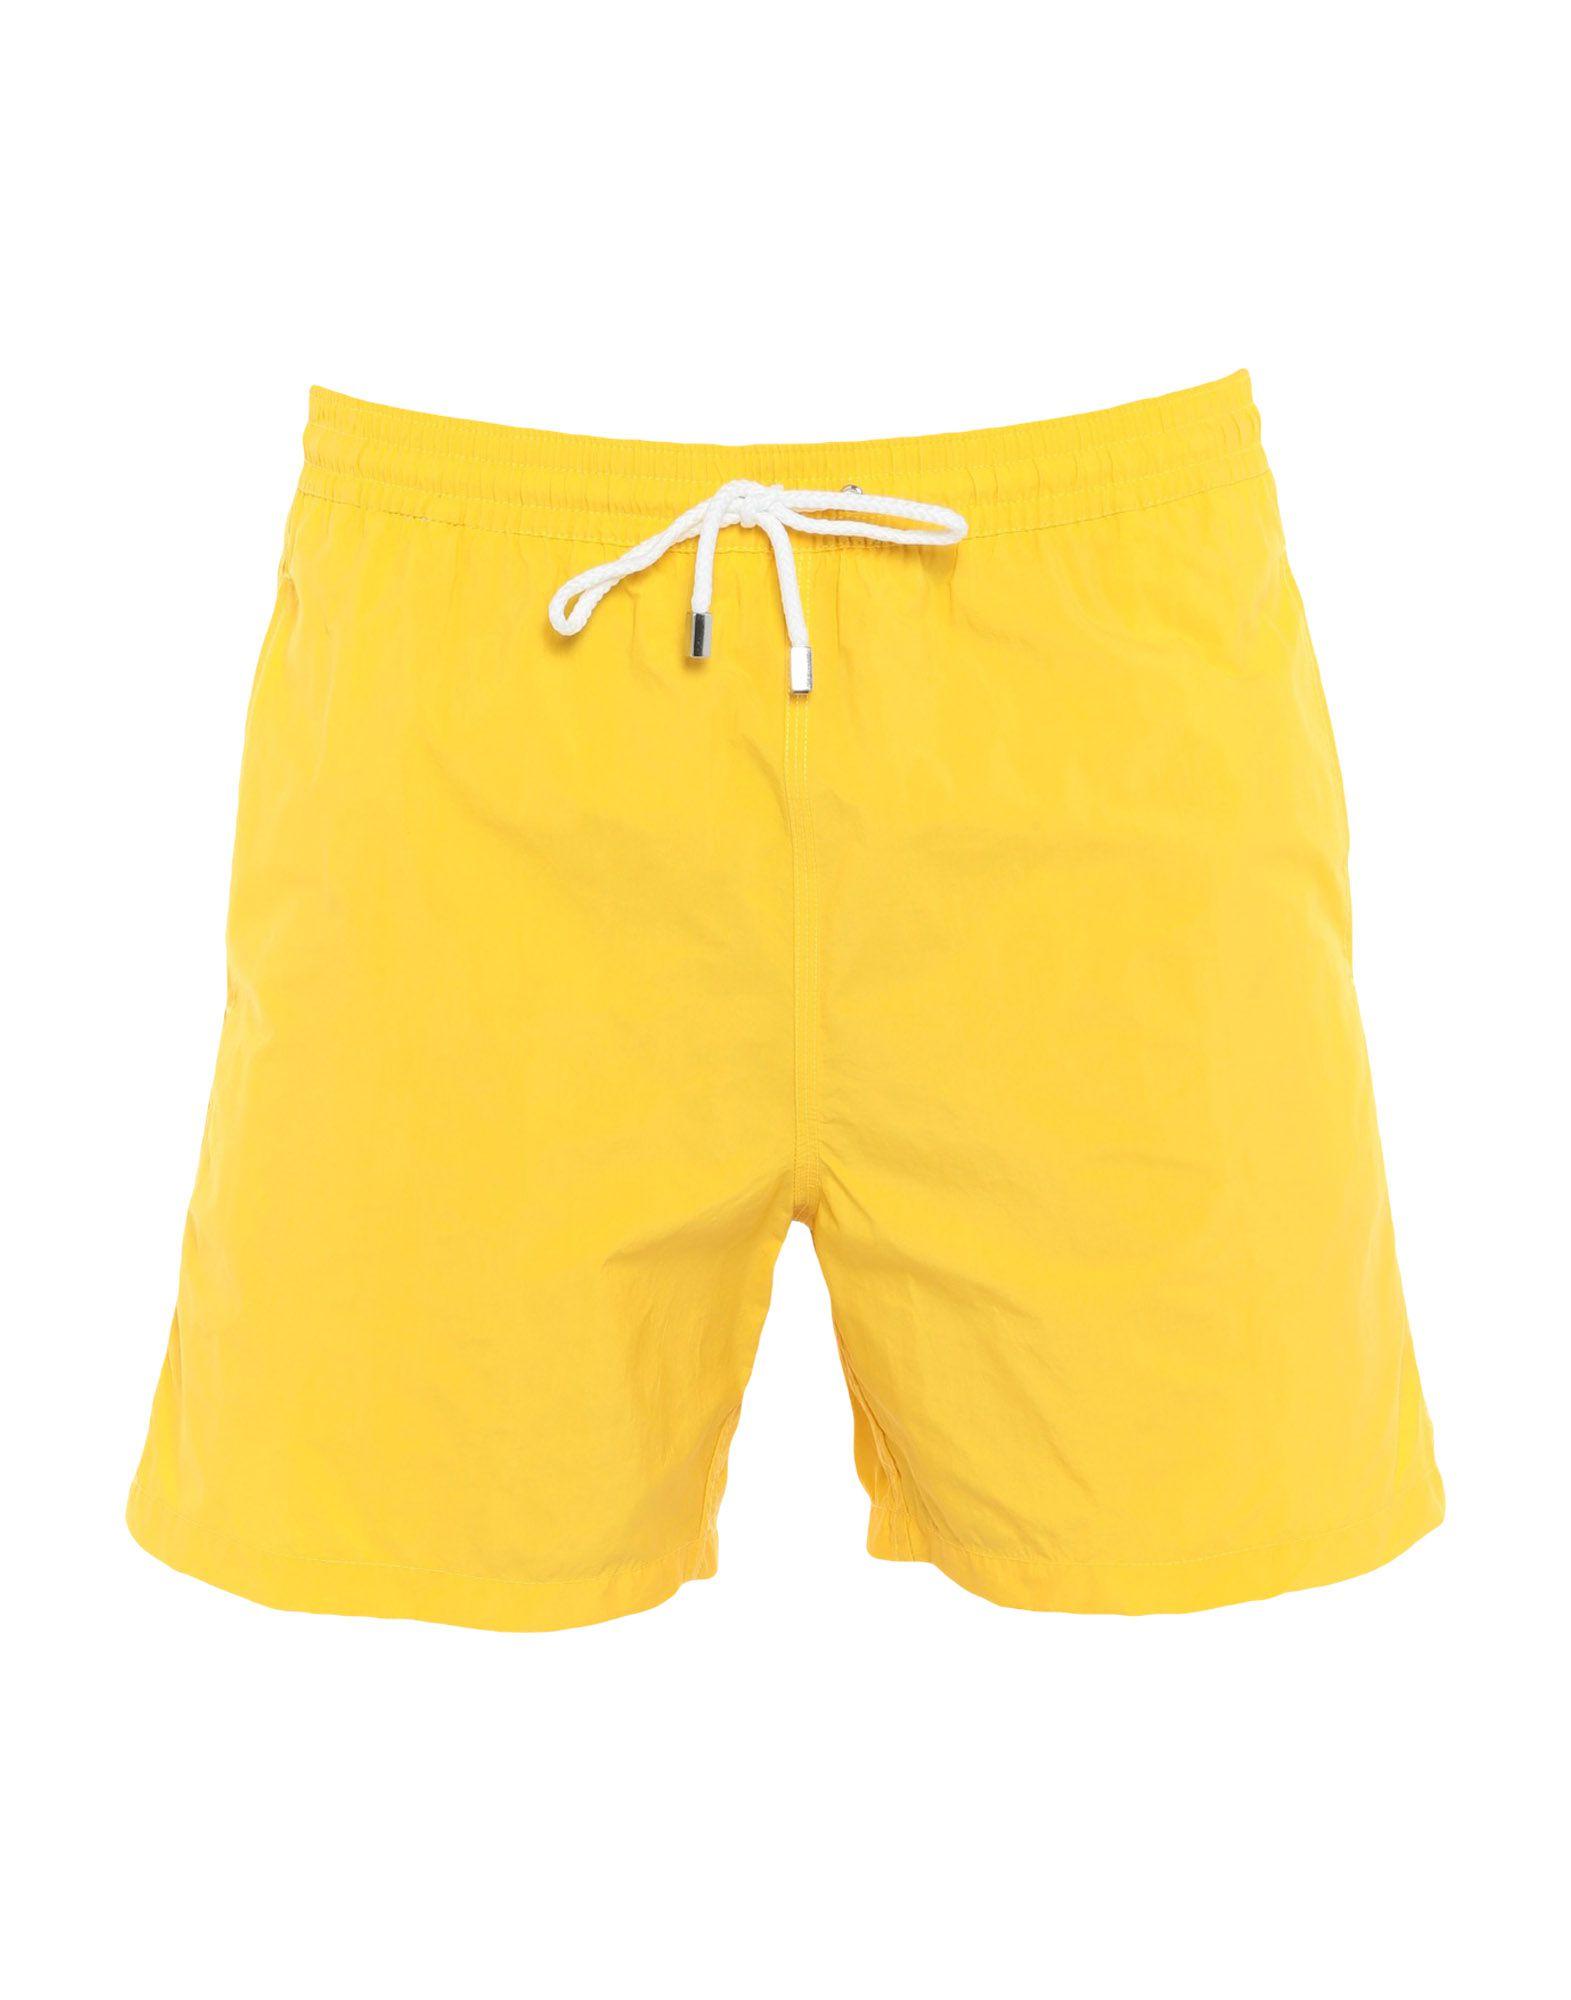 Fiorio Swim Trunks in Yellow for Men - Lyst